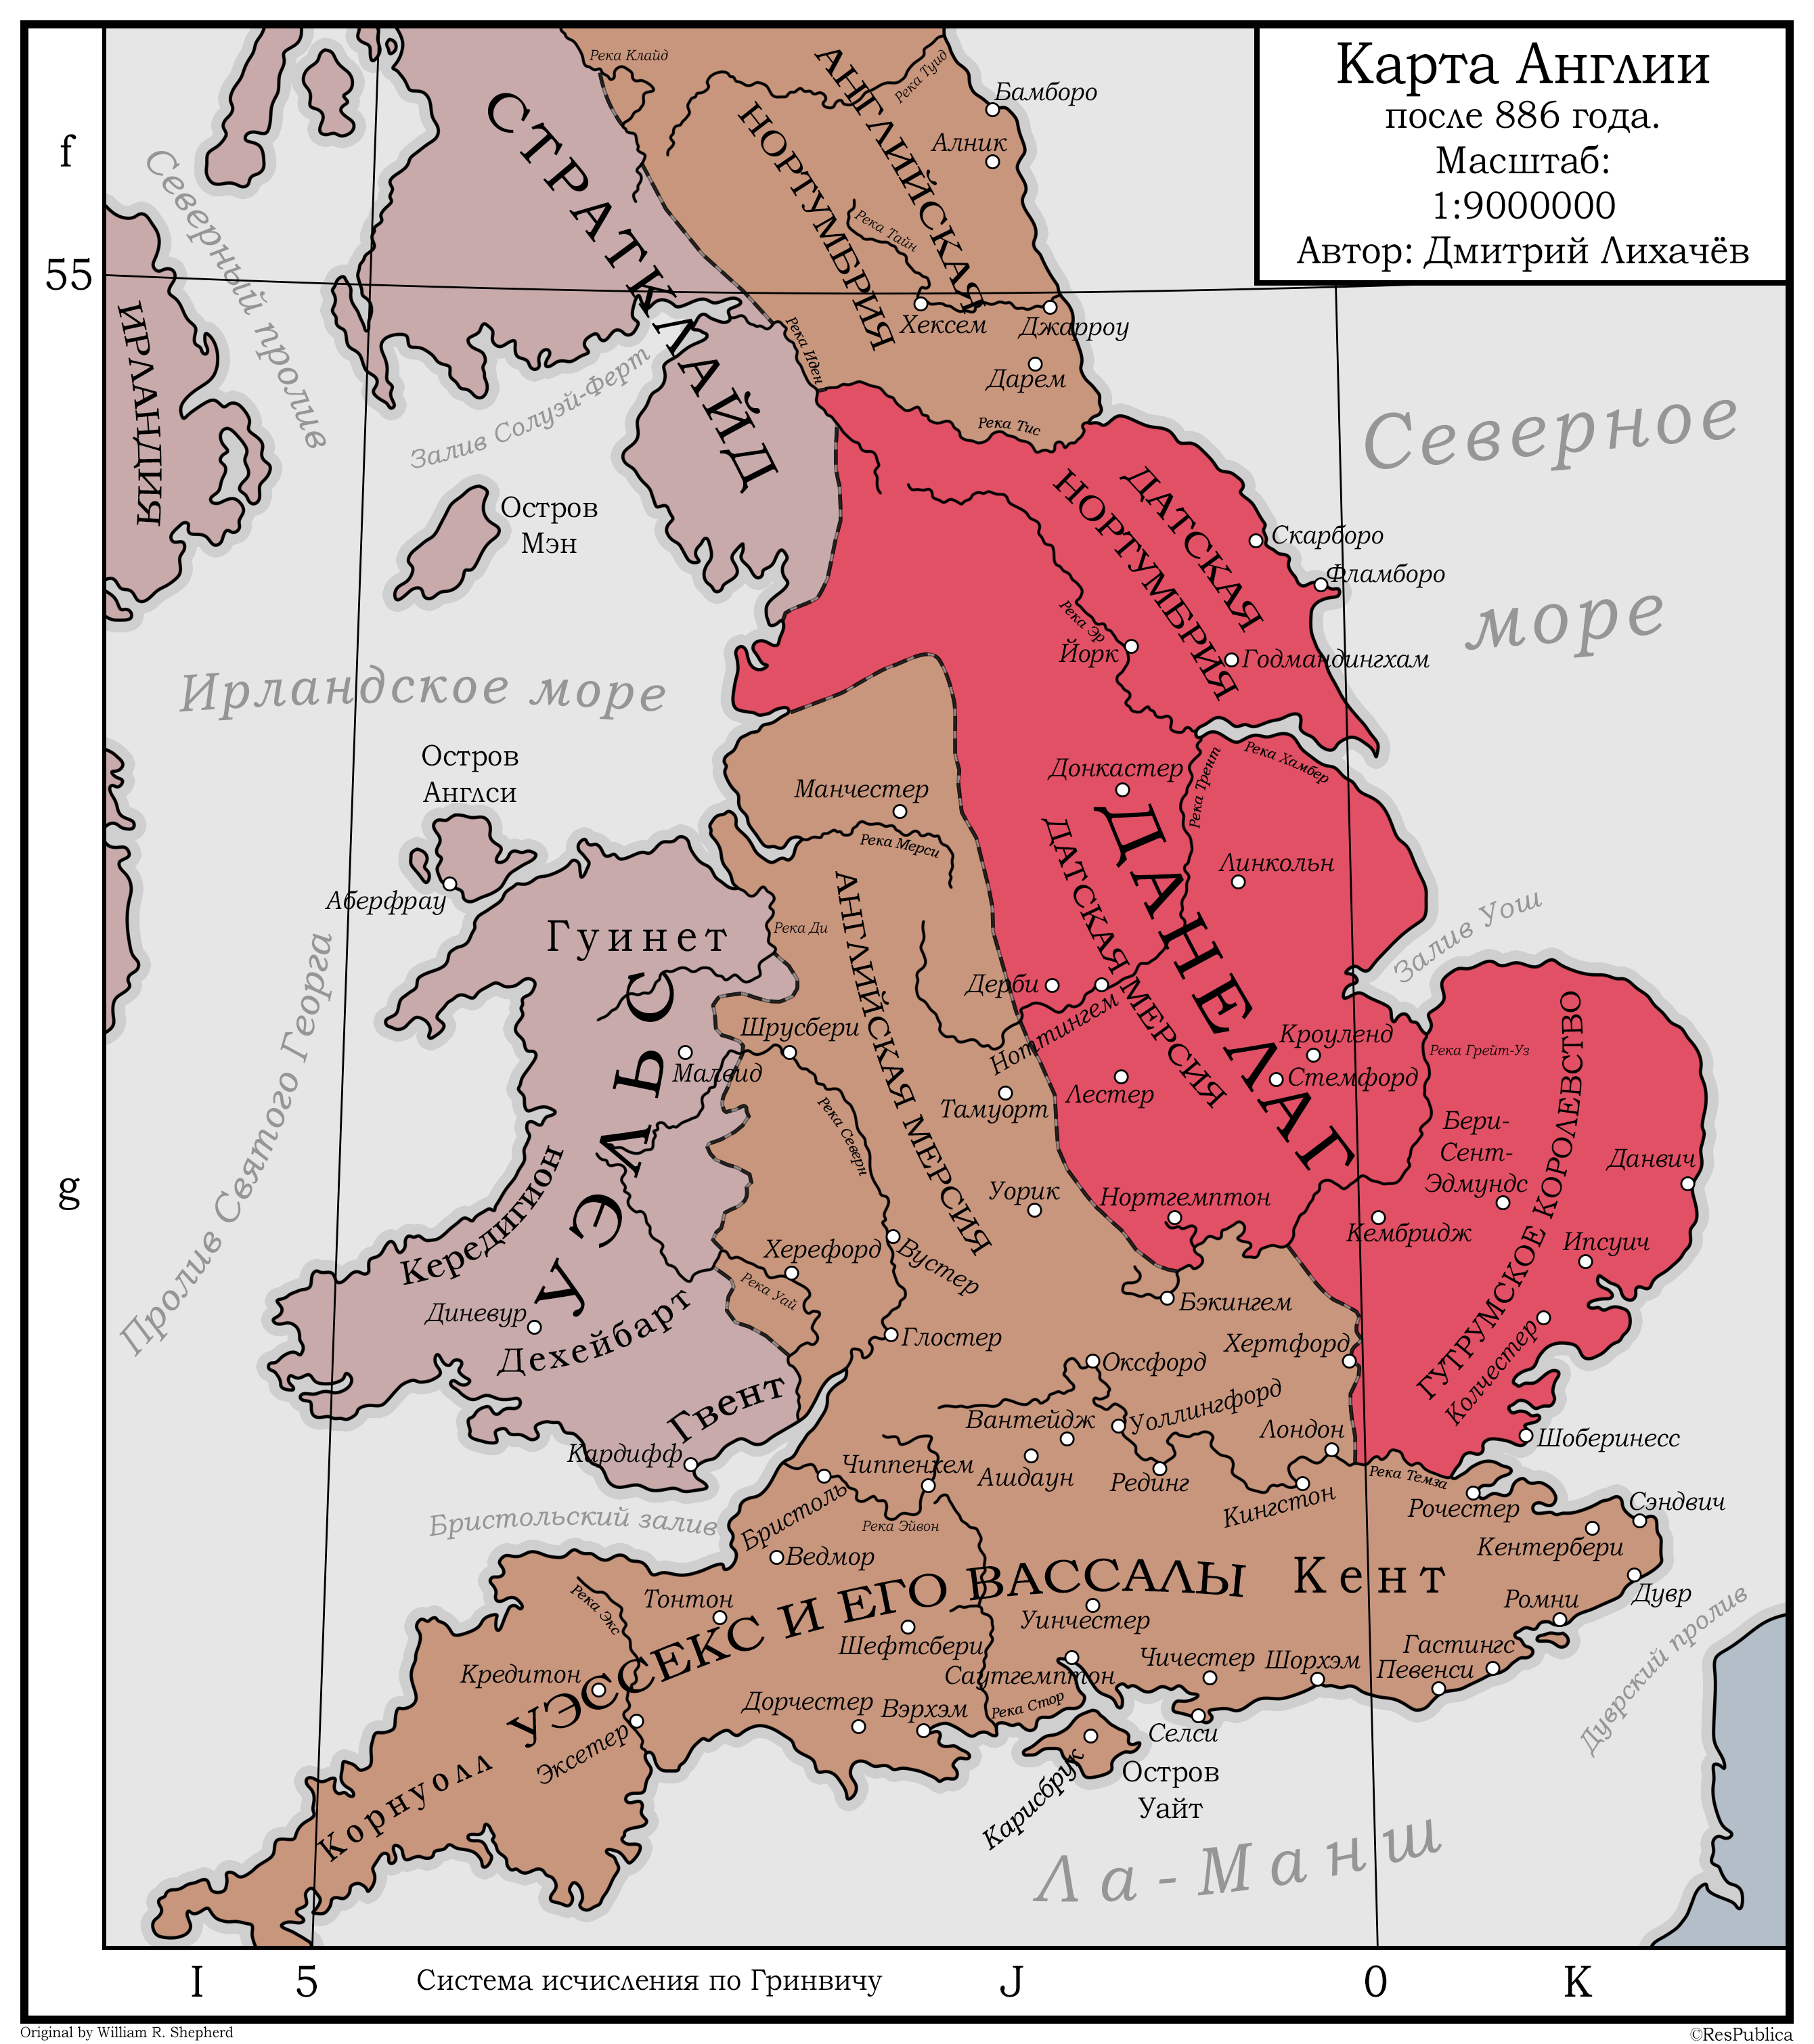 Англия 9 век. Карта Англии 9 век. Королевства Англии 8-9 век. Карта королевств Англии в 9 веке. Карта Великобритании 15 века.